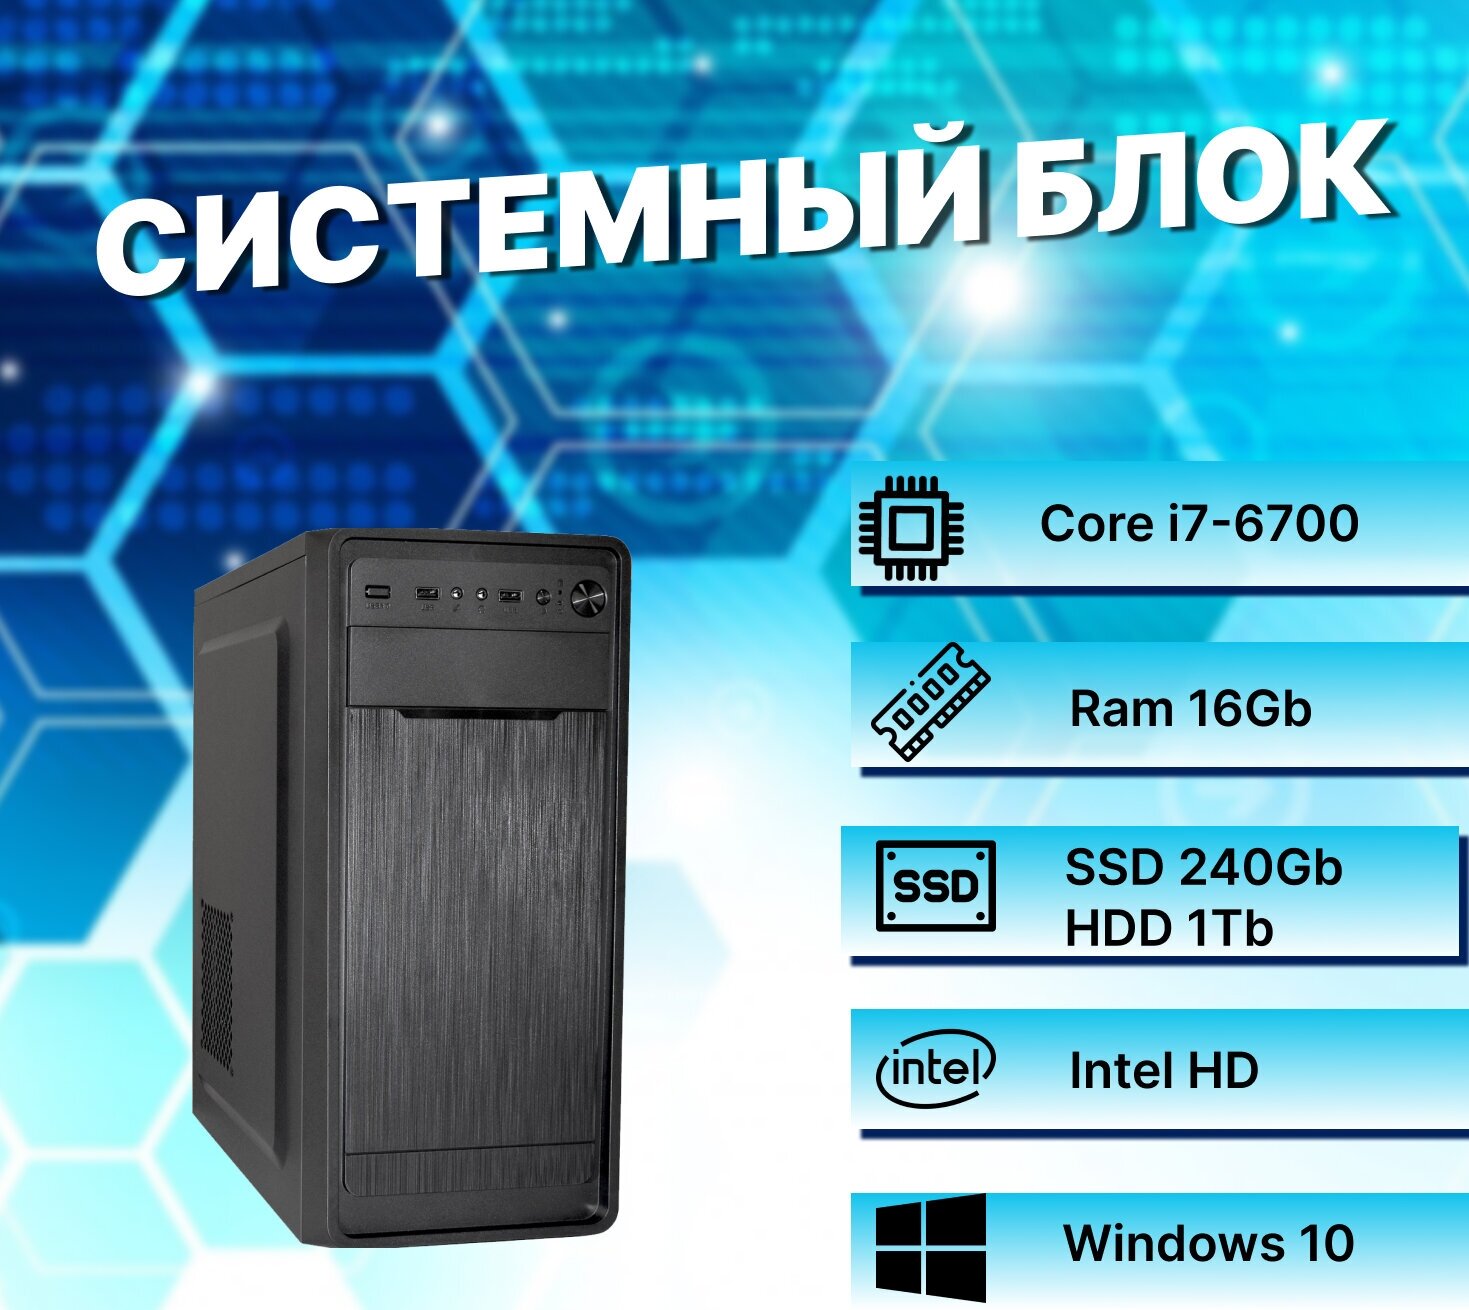 Системный блок Intel Core I7-6700 (3.4ГГц)/ RAM 16Gb/ SSD 240Gb/ HDD 1Tb/ Intel HD/ Windows 10 Pro